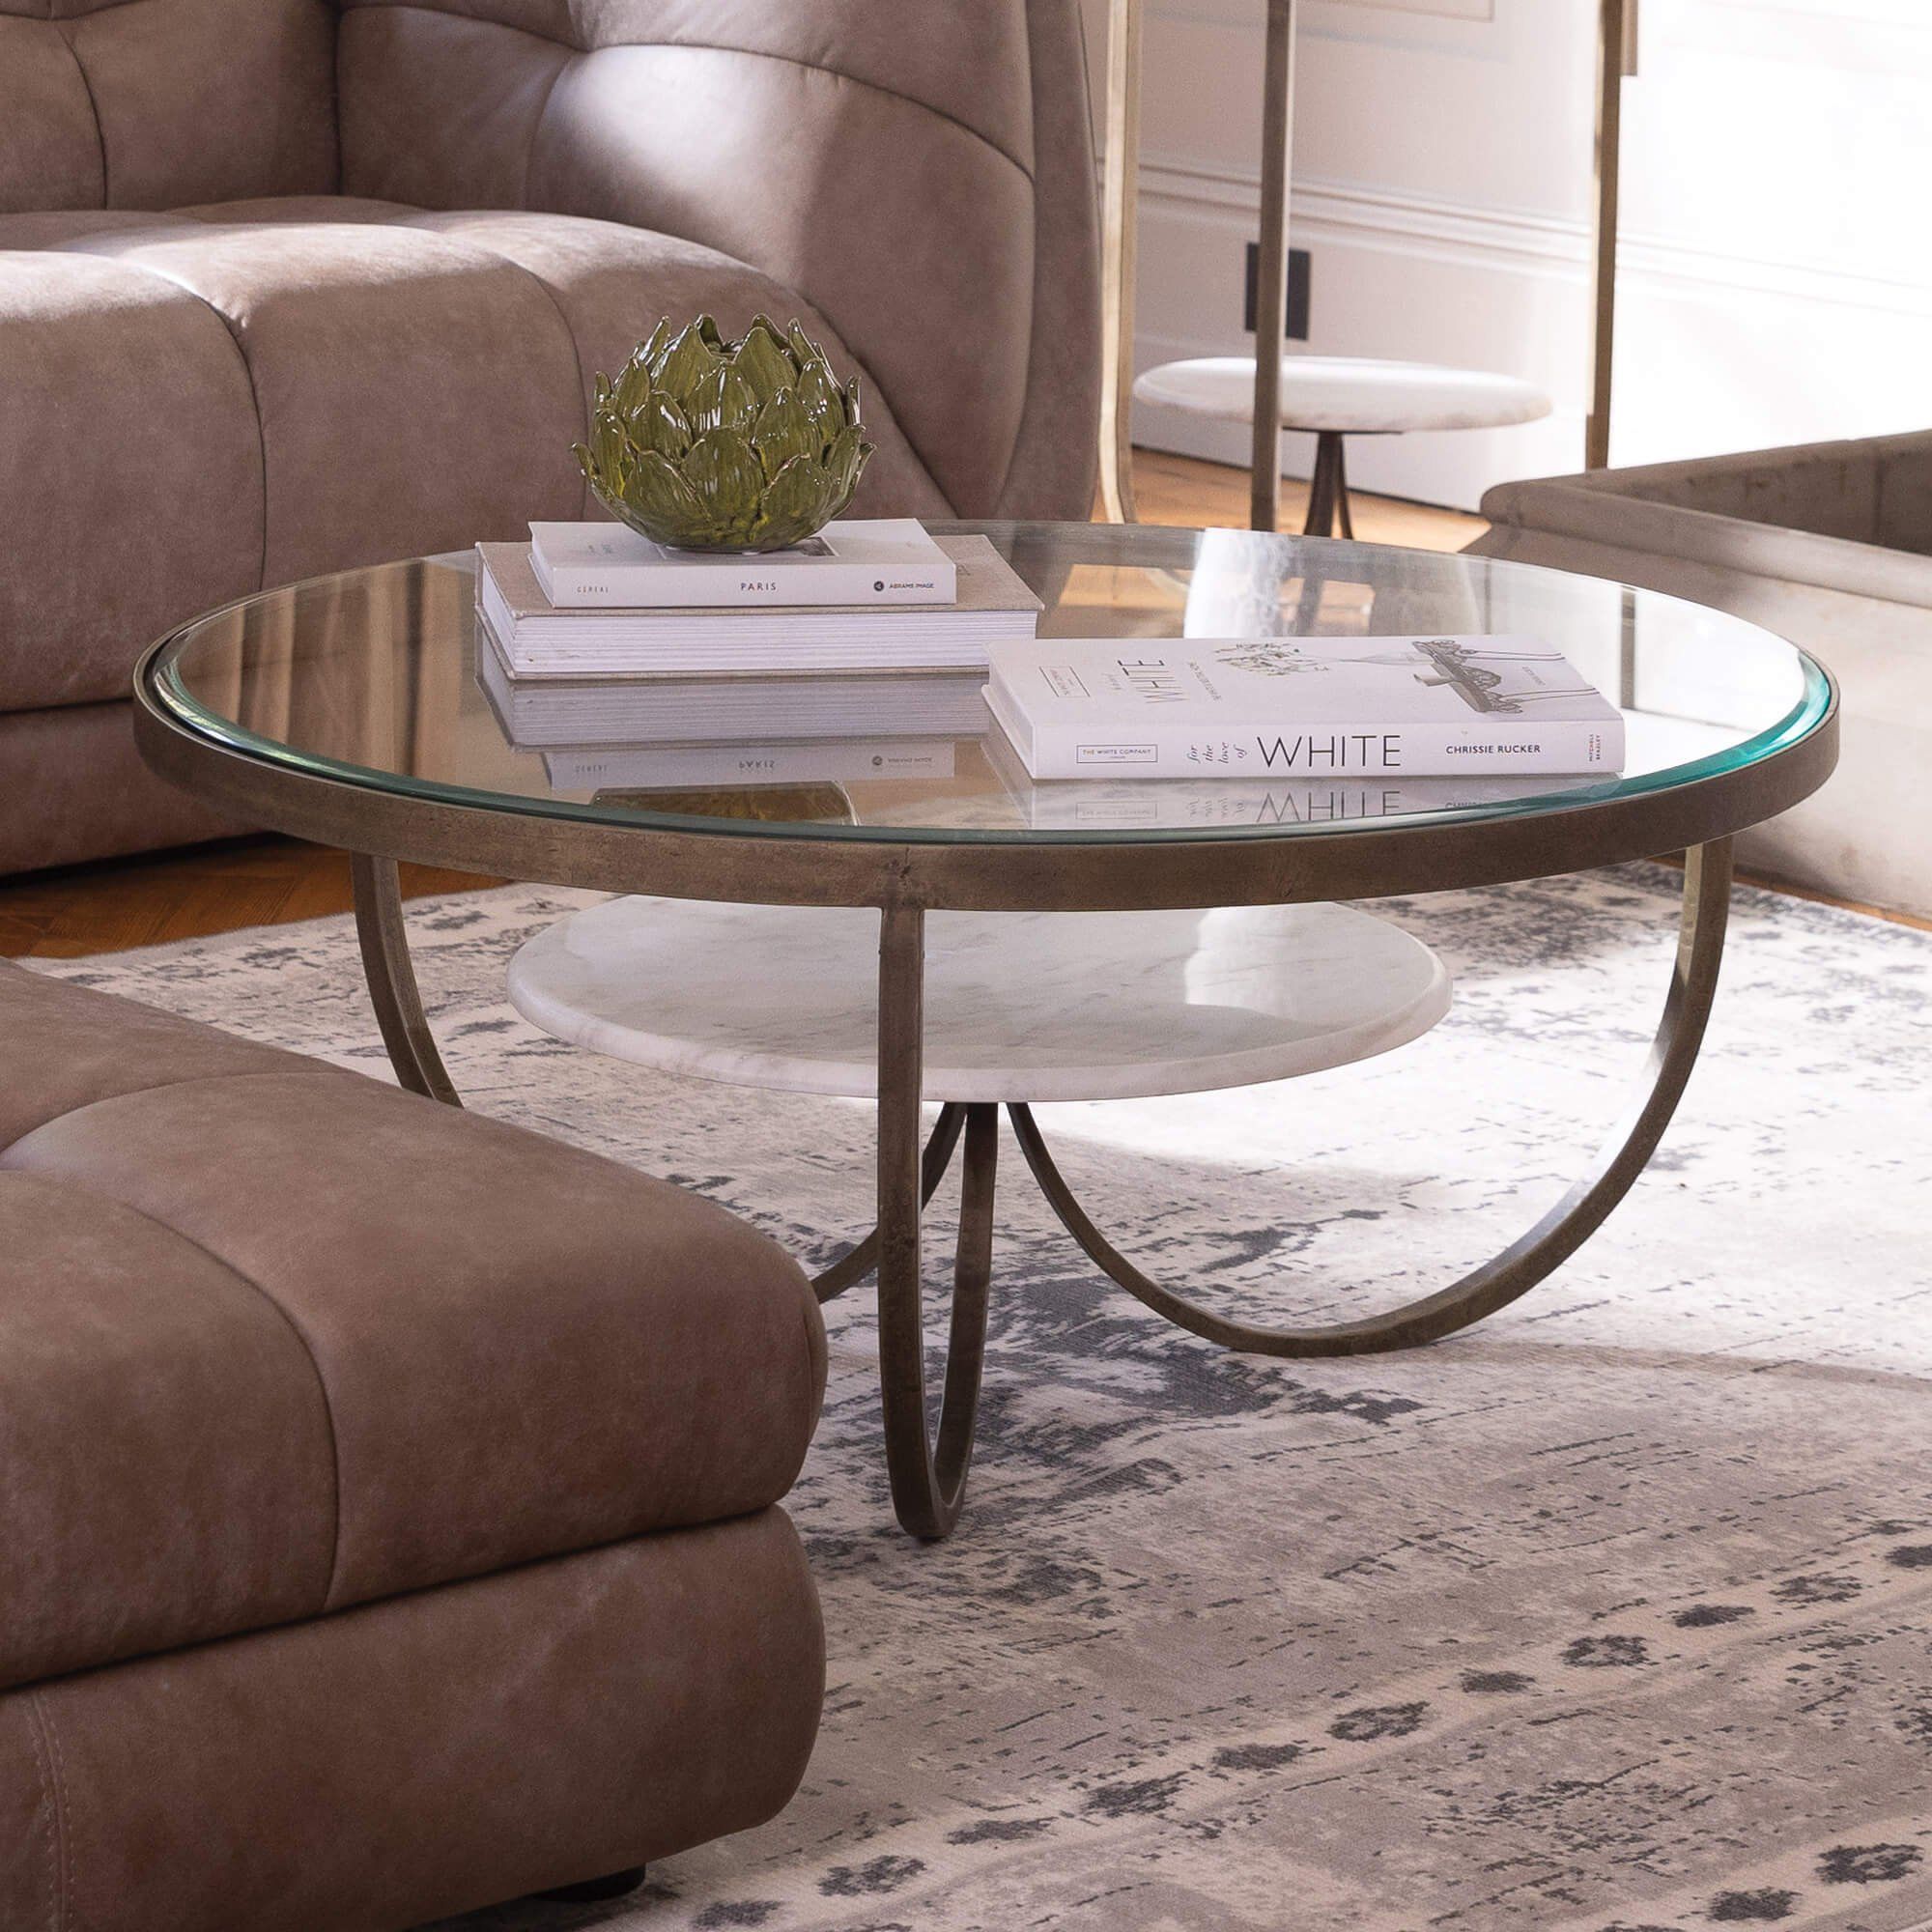 Nebu Marble & Glass Coffee Table With Regard To Glass Coffee Tables With Lower Shelves (View 11 of 15)